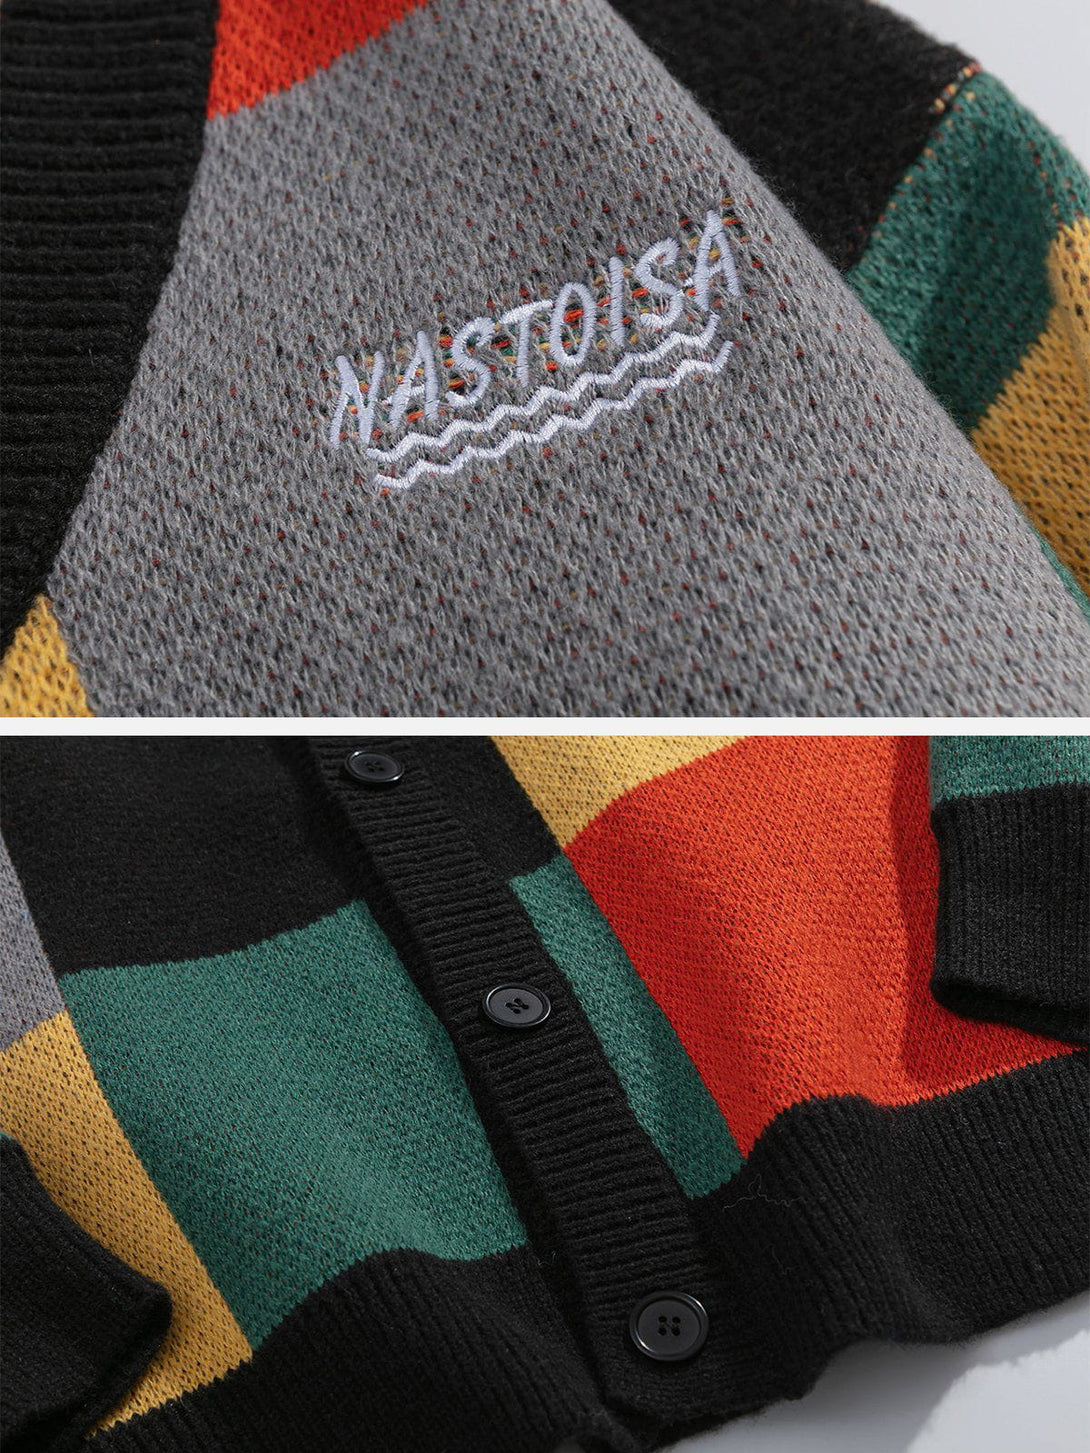 Majesda® - Colorblock Cardigan outfit ideas streetwear fashion